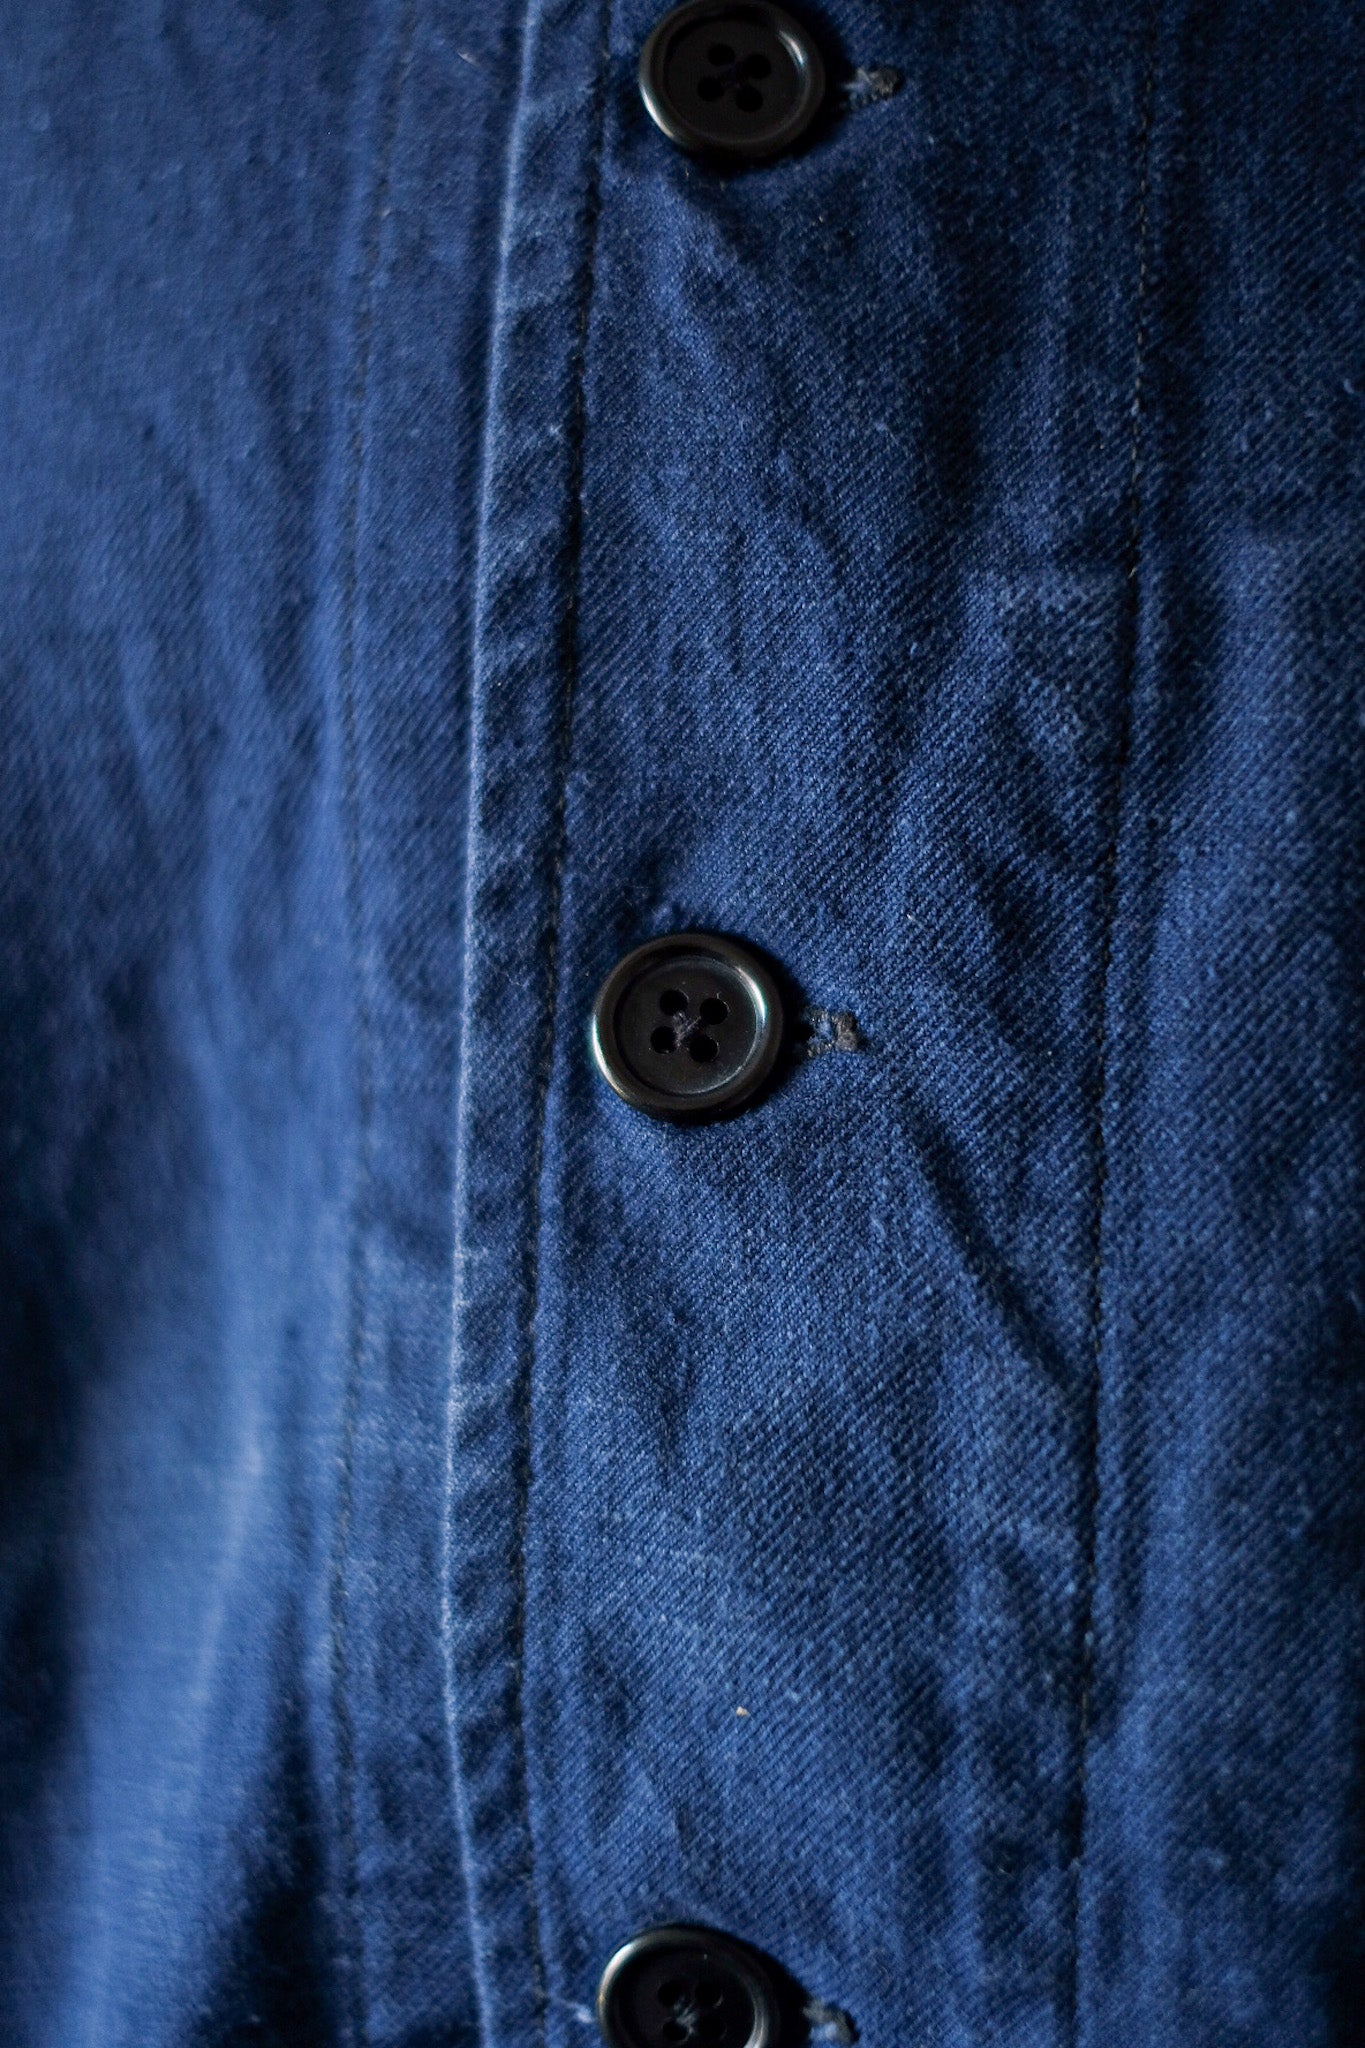 [~ 40's] แจ็คเก็ตผ้าฝ้ายสีน้ำเงินวินเทจฝรั่งเศสวินเทจ